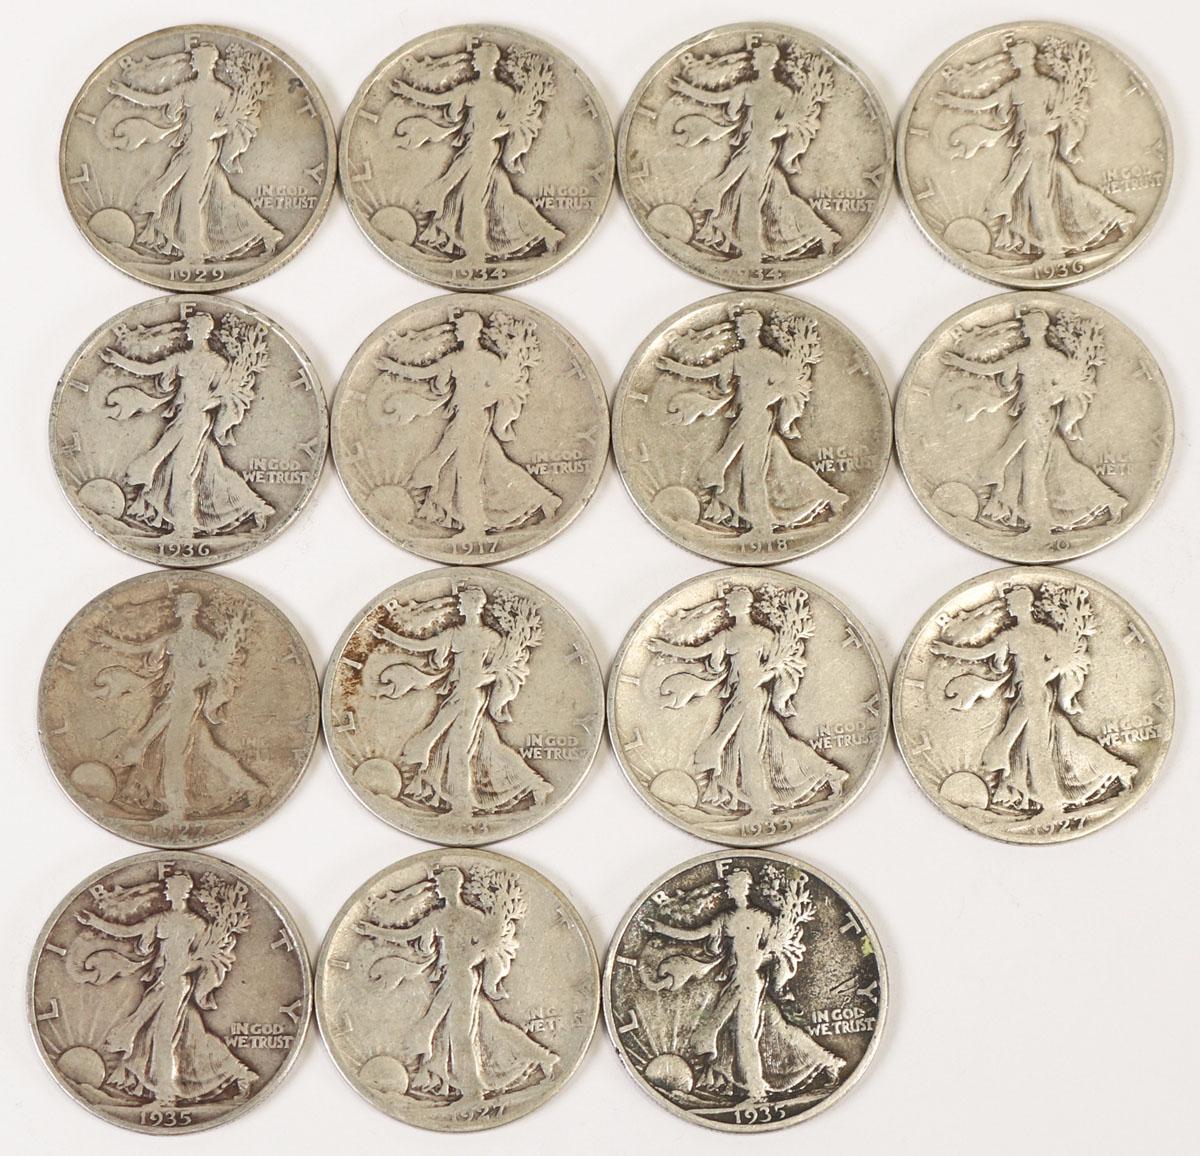 15 Walking Liberty Silver Half Dollars; All 1942 & Various Mints